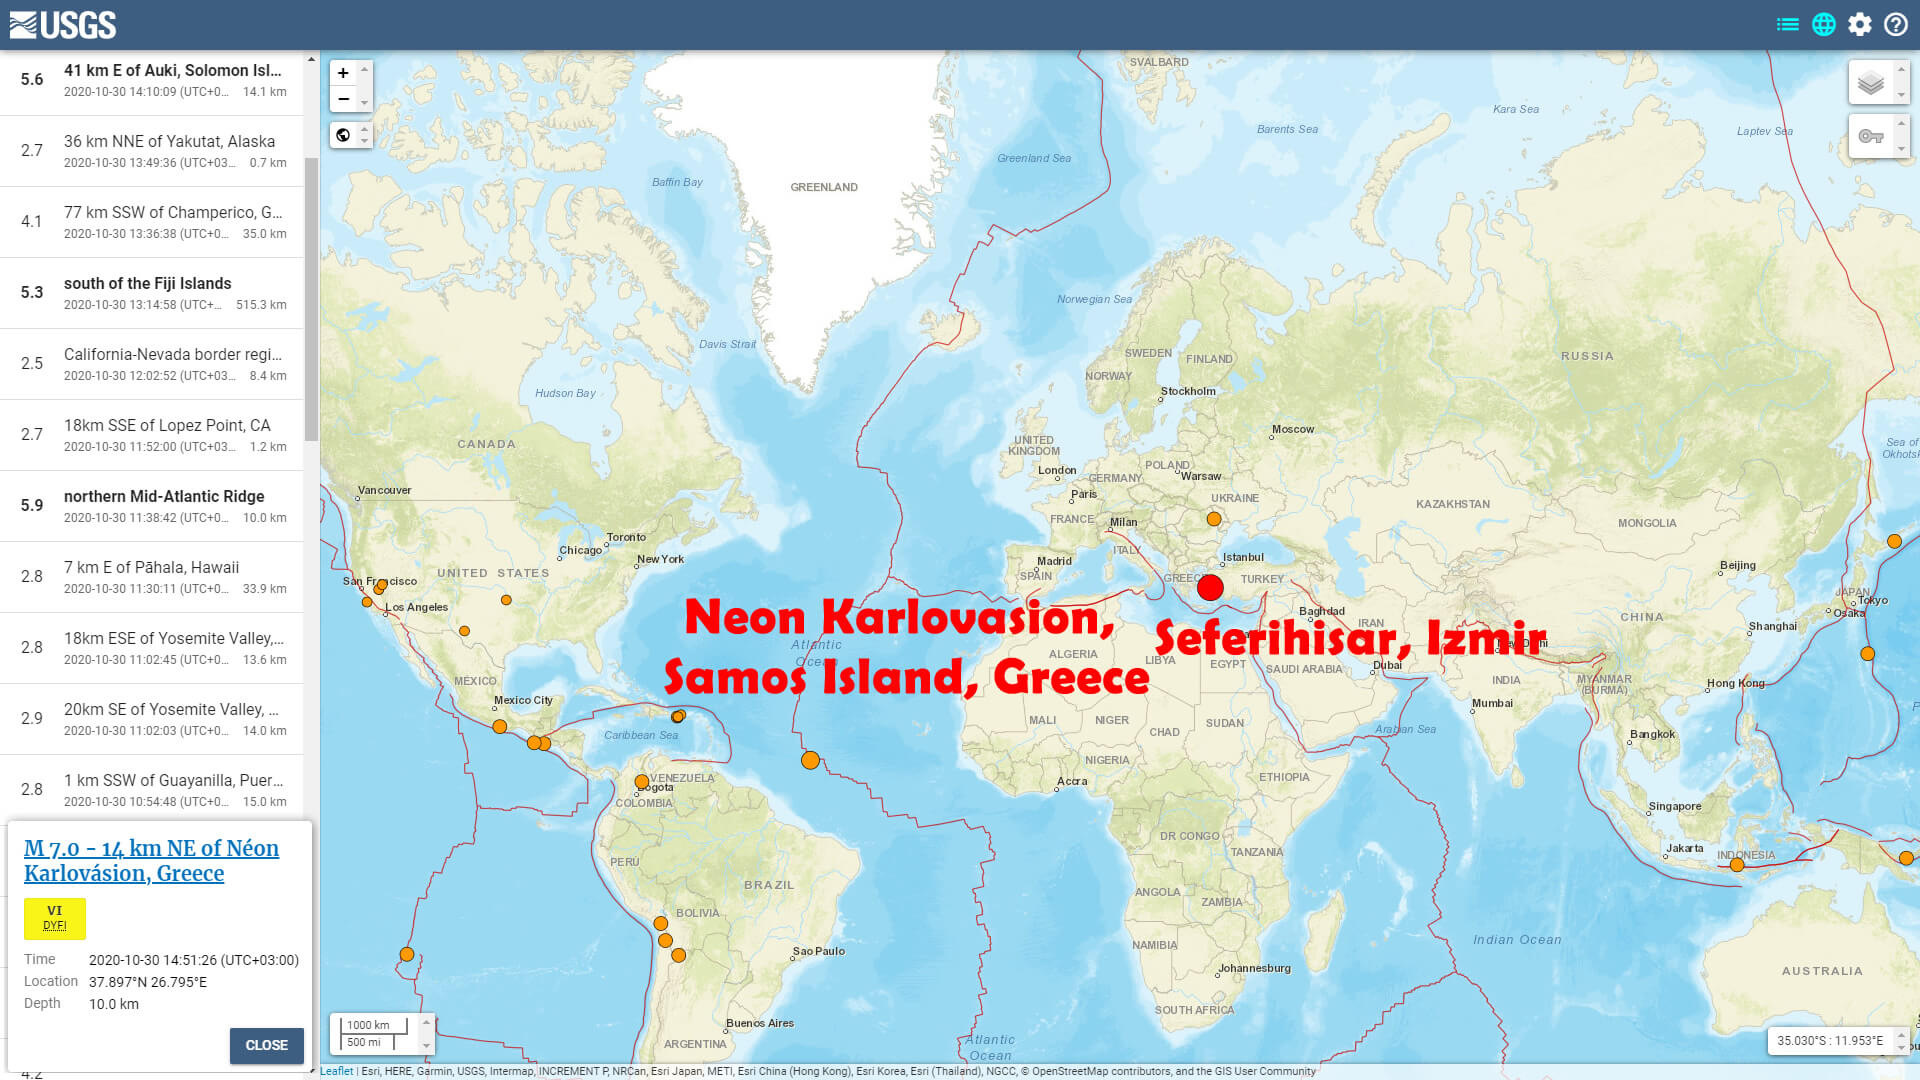 Samos Greece - Seferihisar Izmir - Sep 30 Earthquake Map